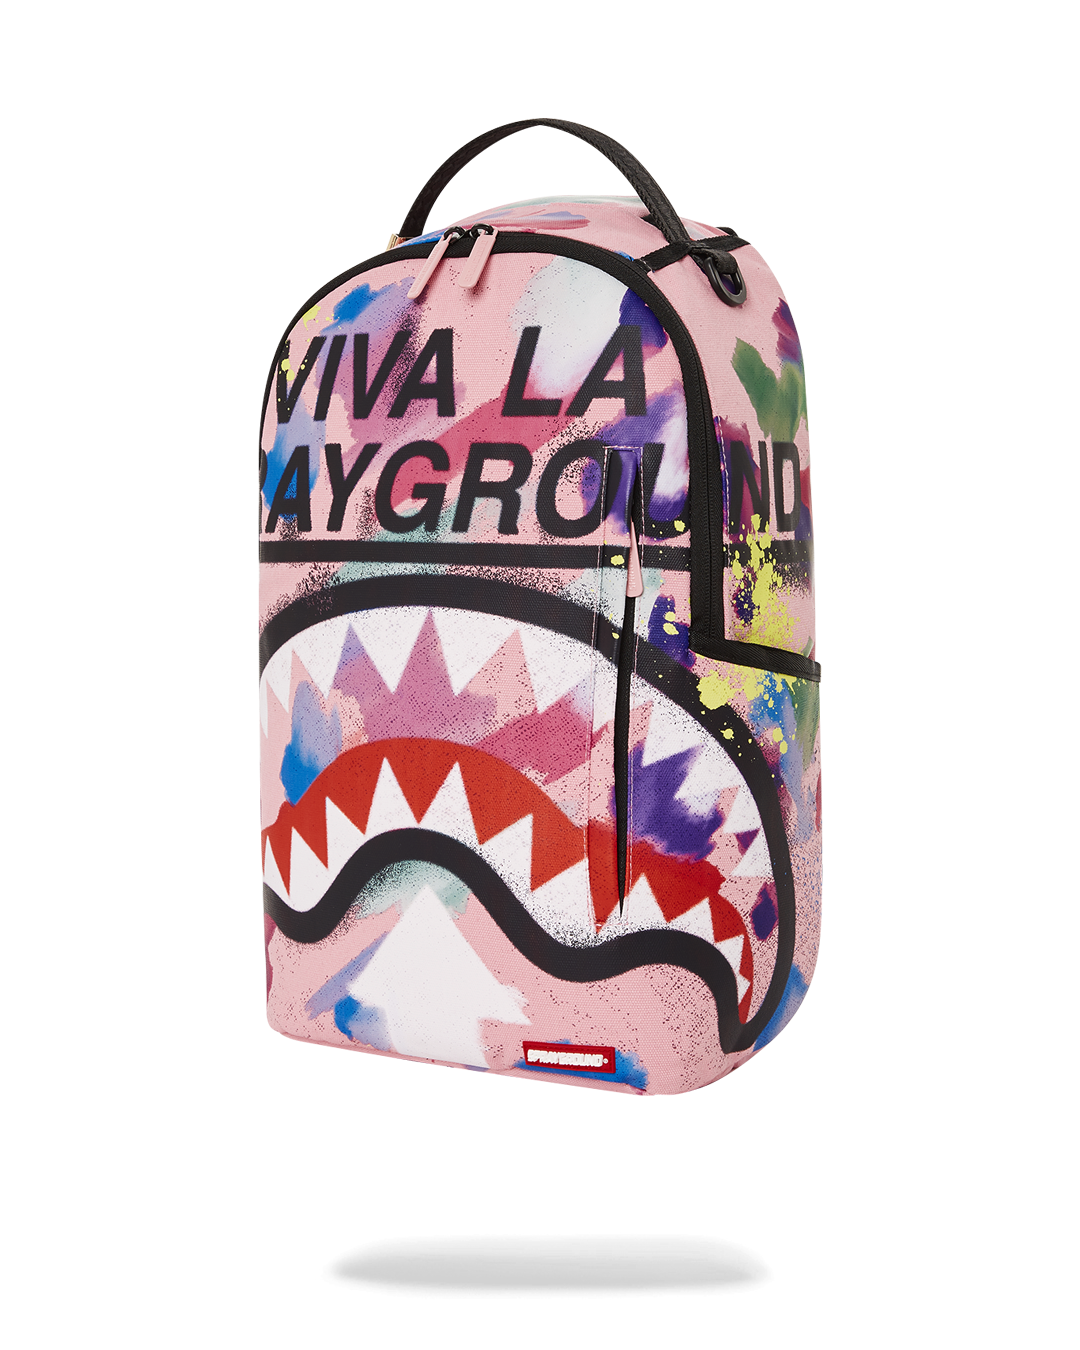 SPRAYGROUND BUSHWICK BACKPACK - Pink "VIVA LA SPRAYGROUND" Bag - Limited  Edition